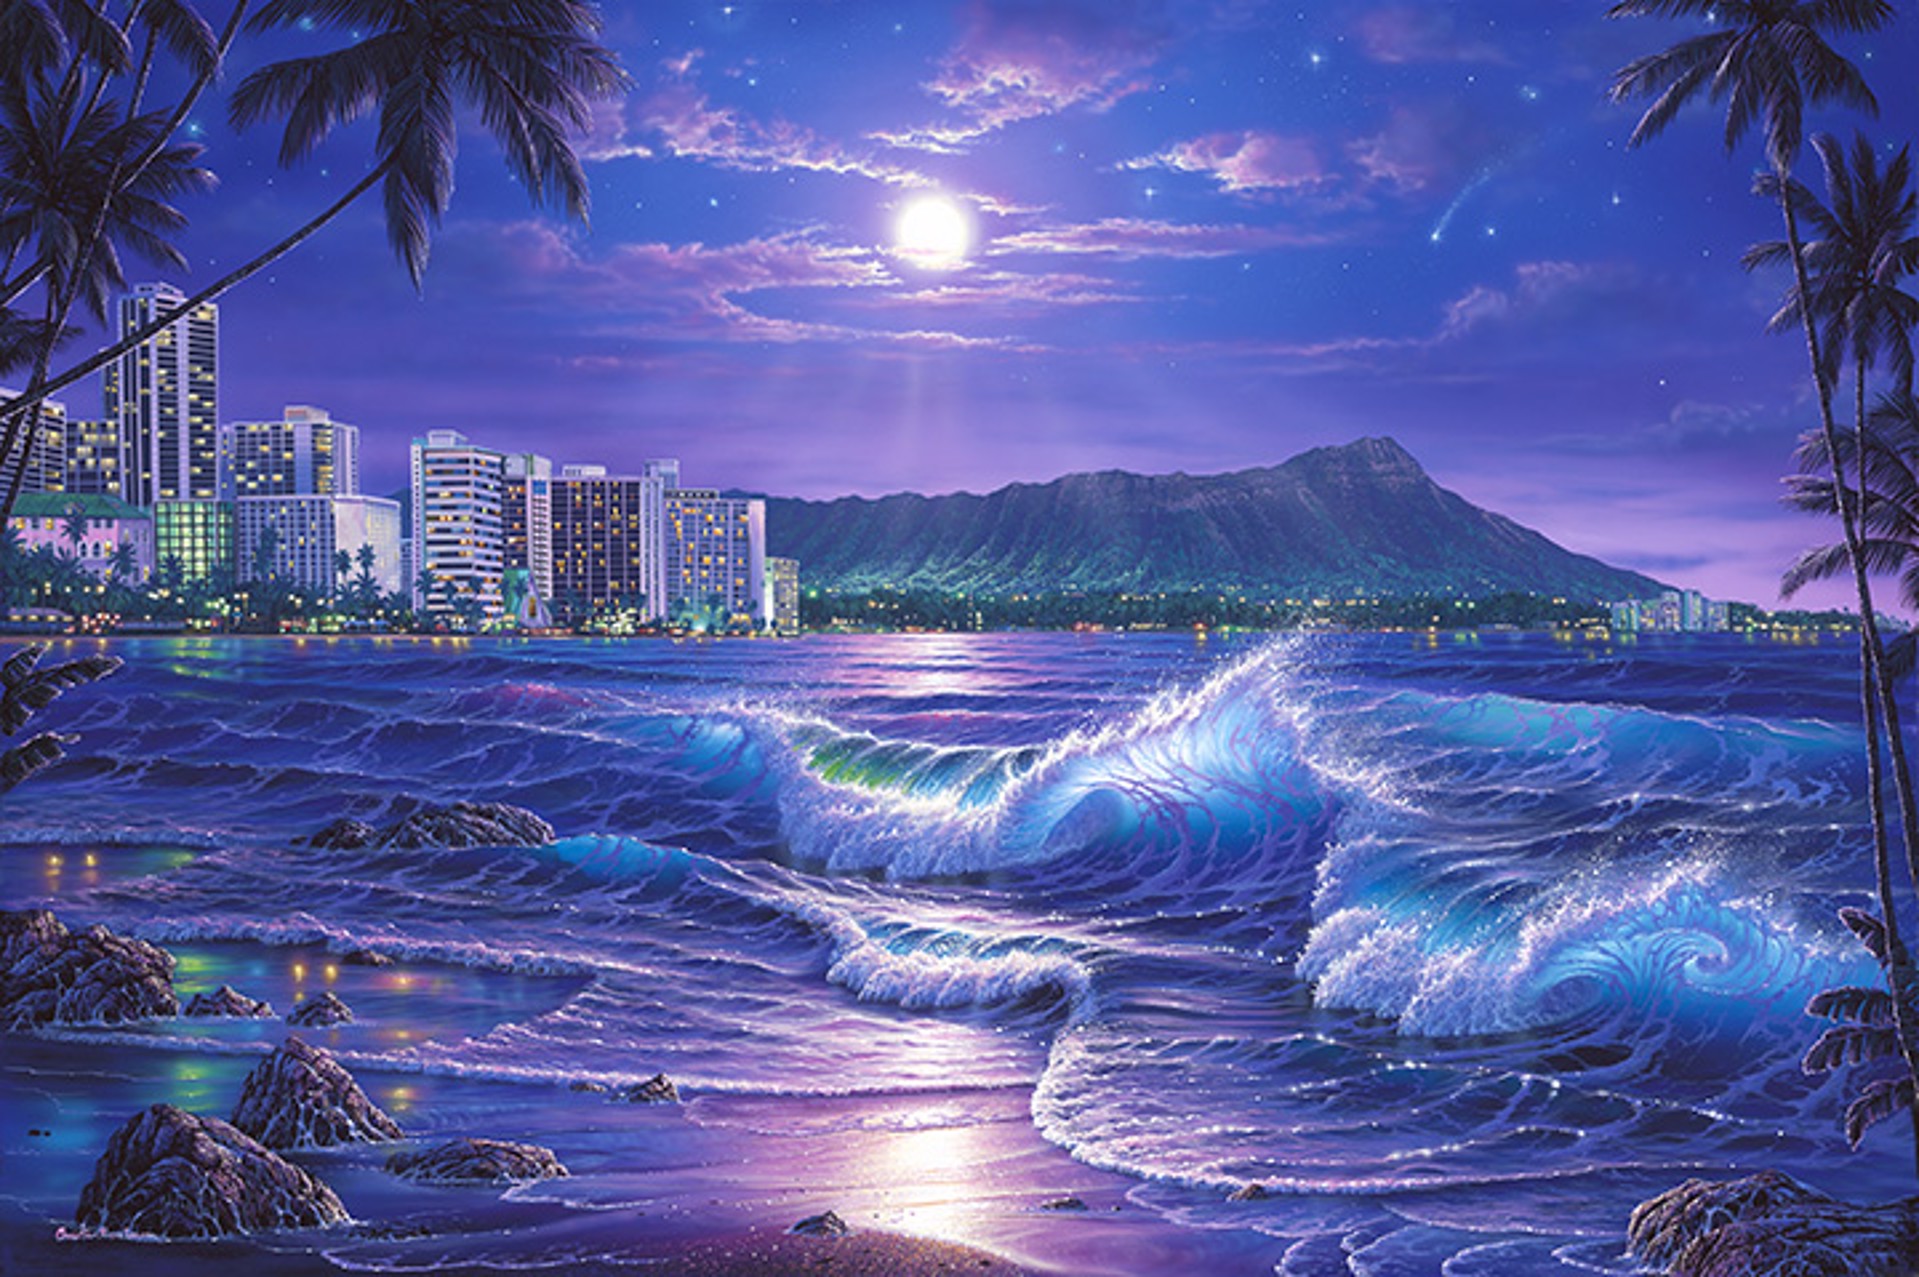 Waikiki Romance by Christian Lassen